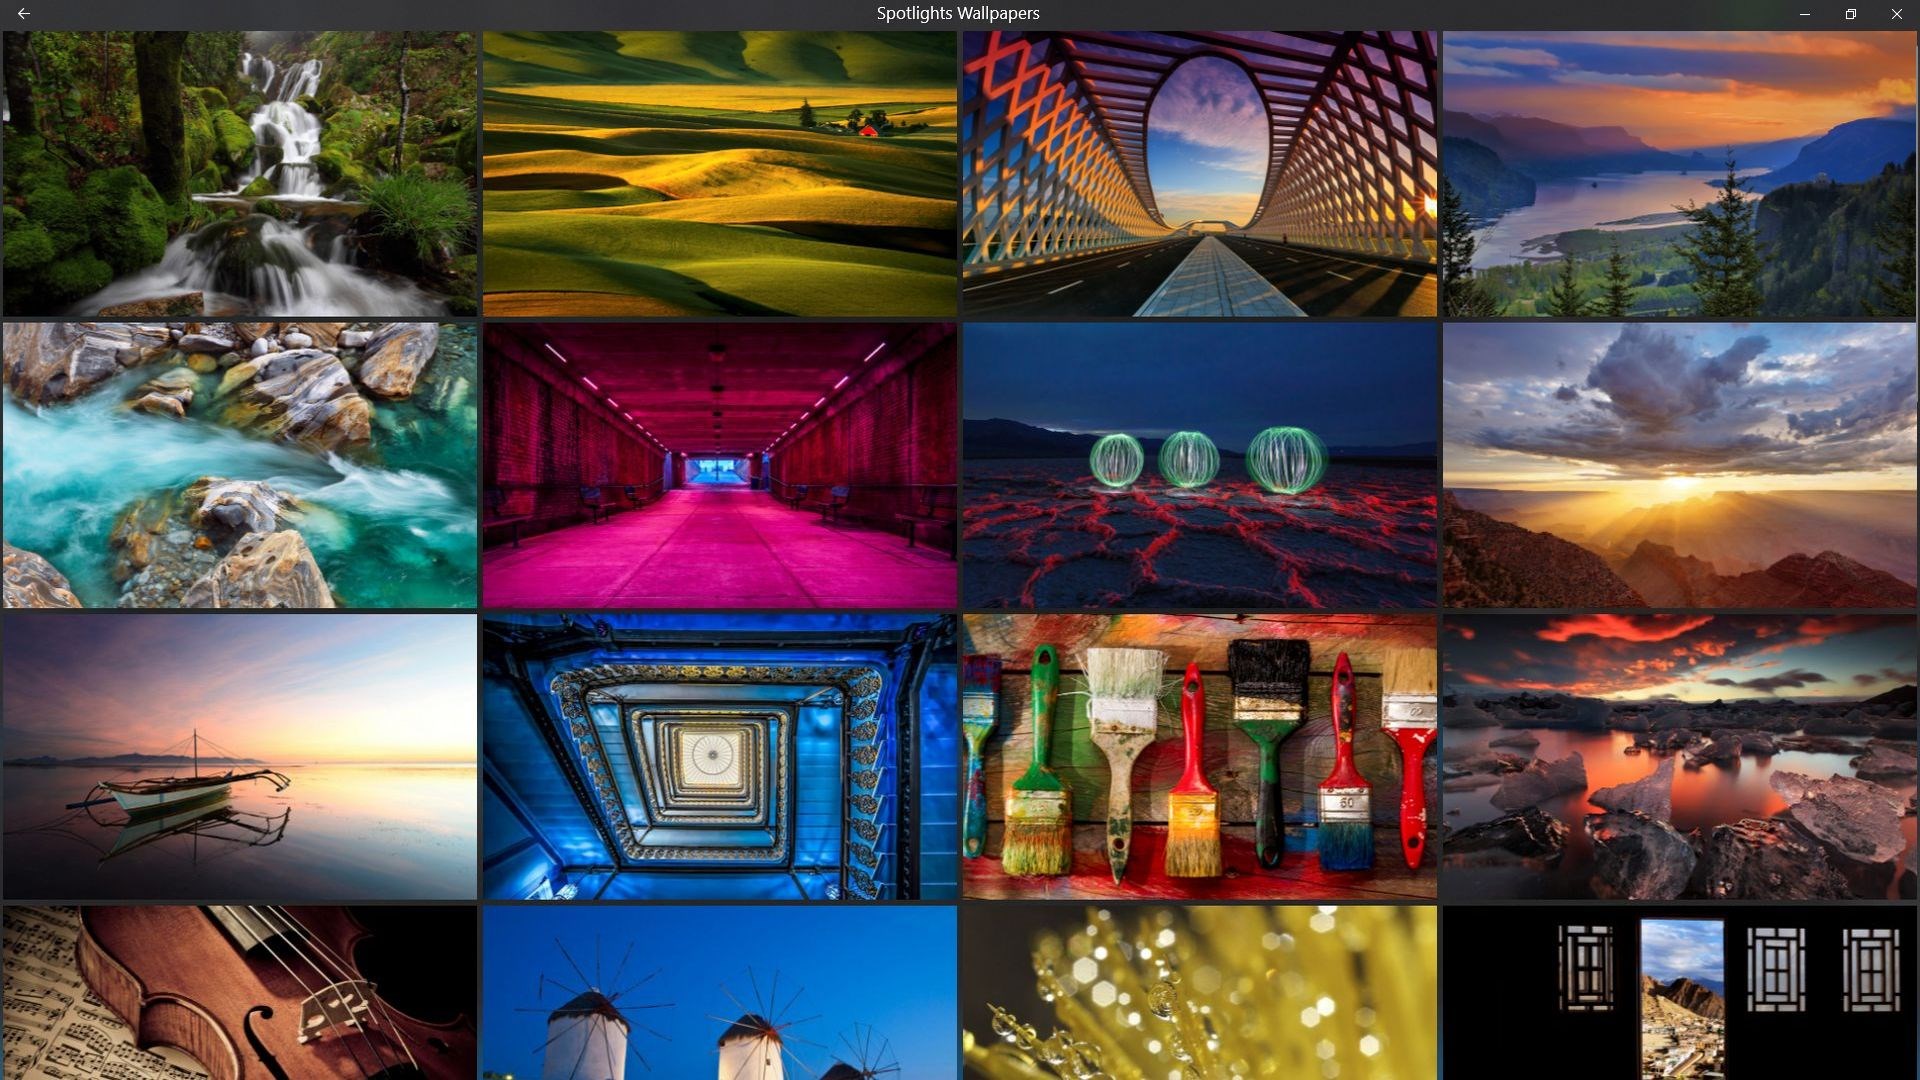 Windows Spotlight Images 2021 Wallpapers